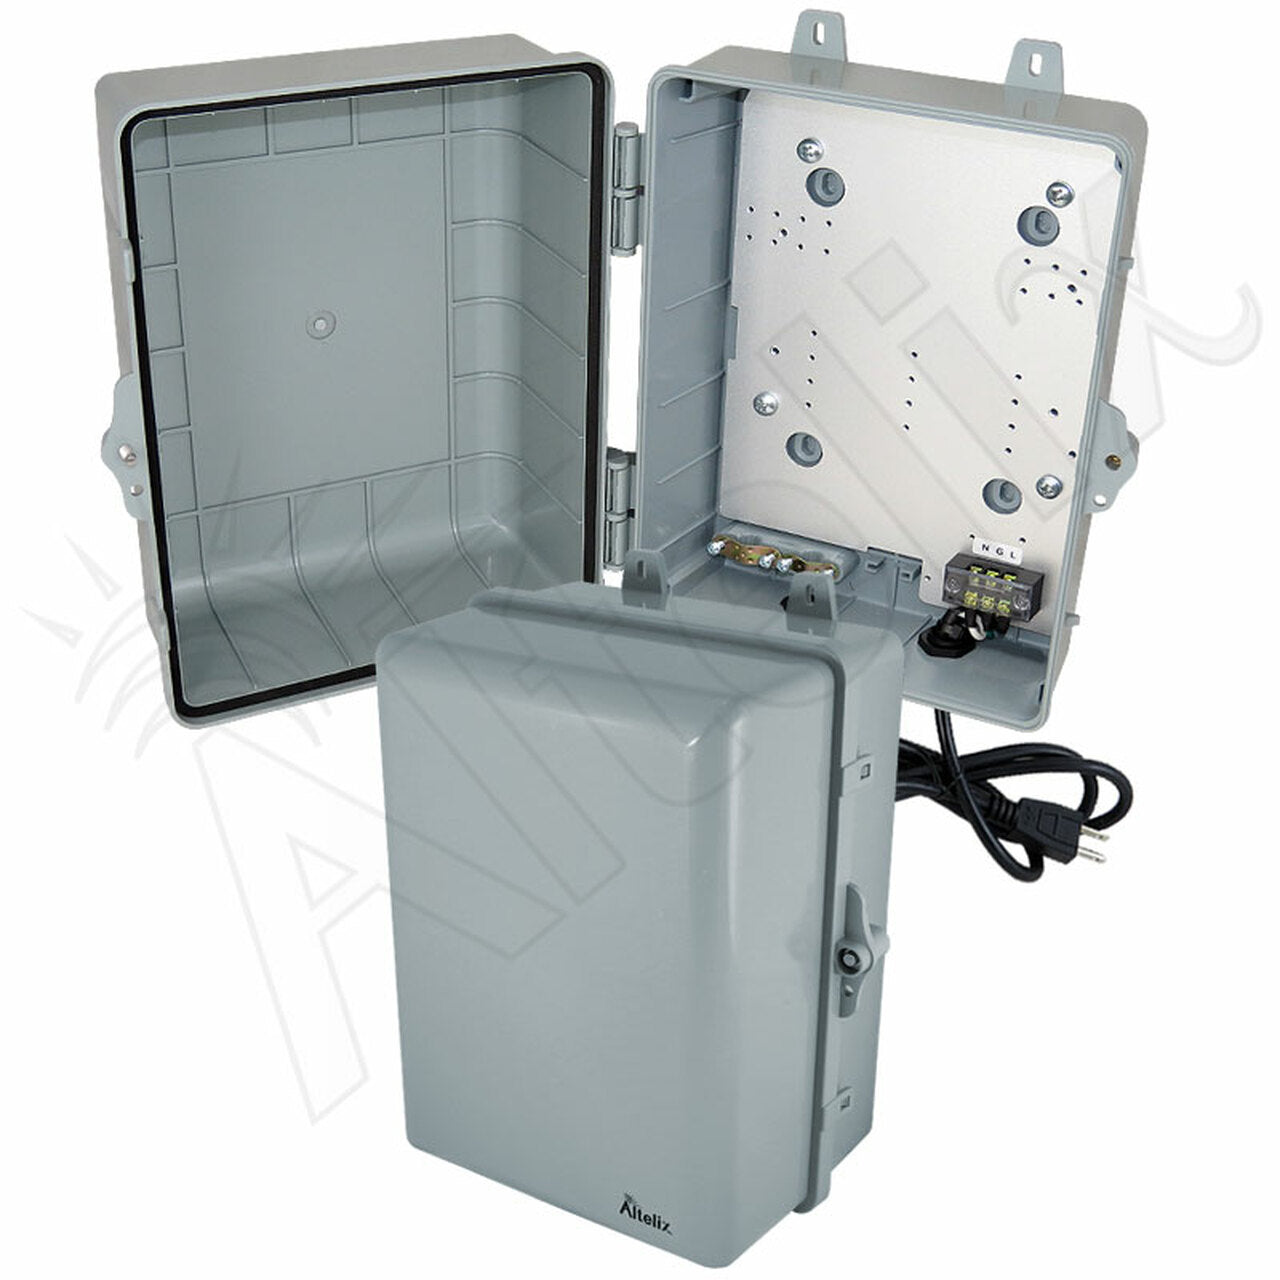 Altelix 12x9x7 NEMA 4X PC+ABS Weatherproof Utility Box NEMA Enclosure with 120 VAC Power Terminal & Power Cord - 0